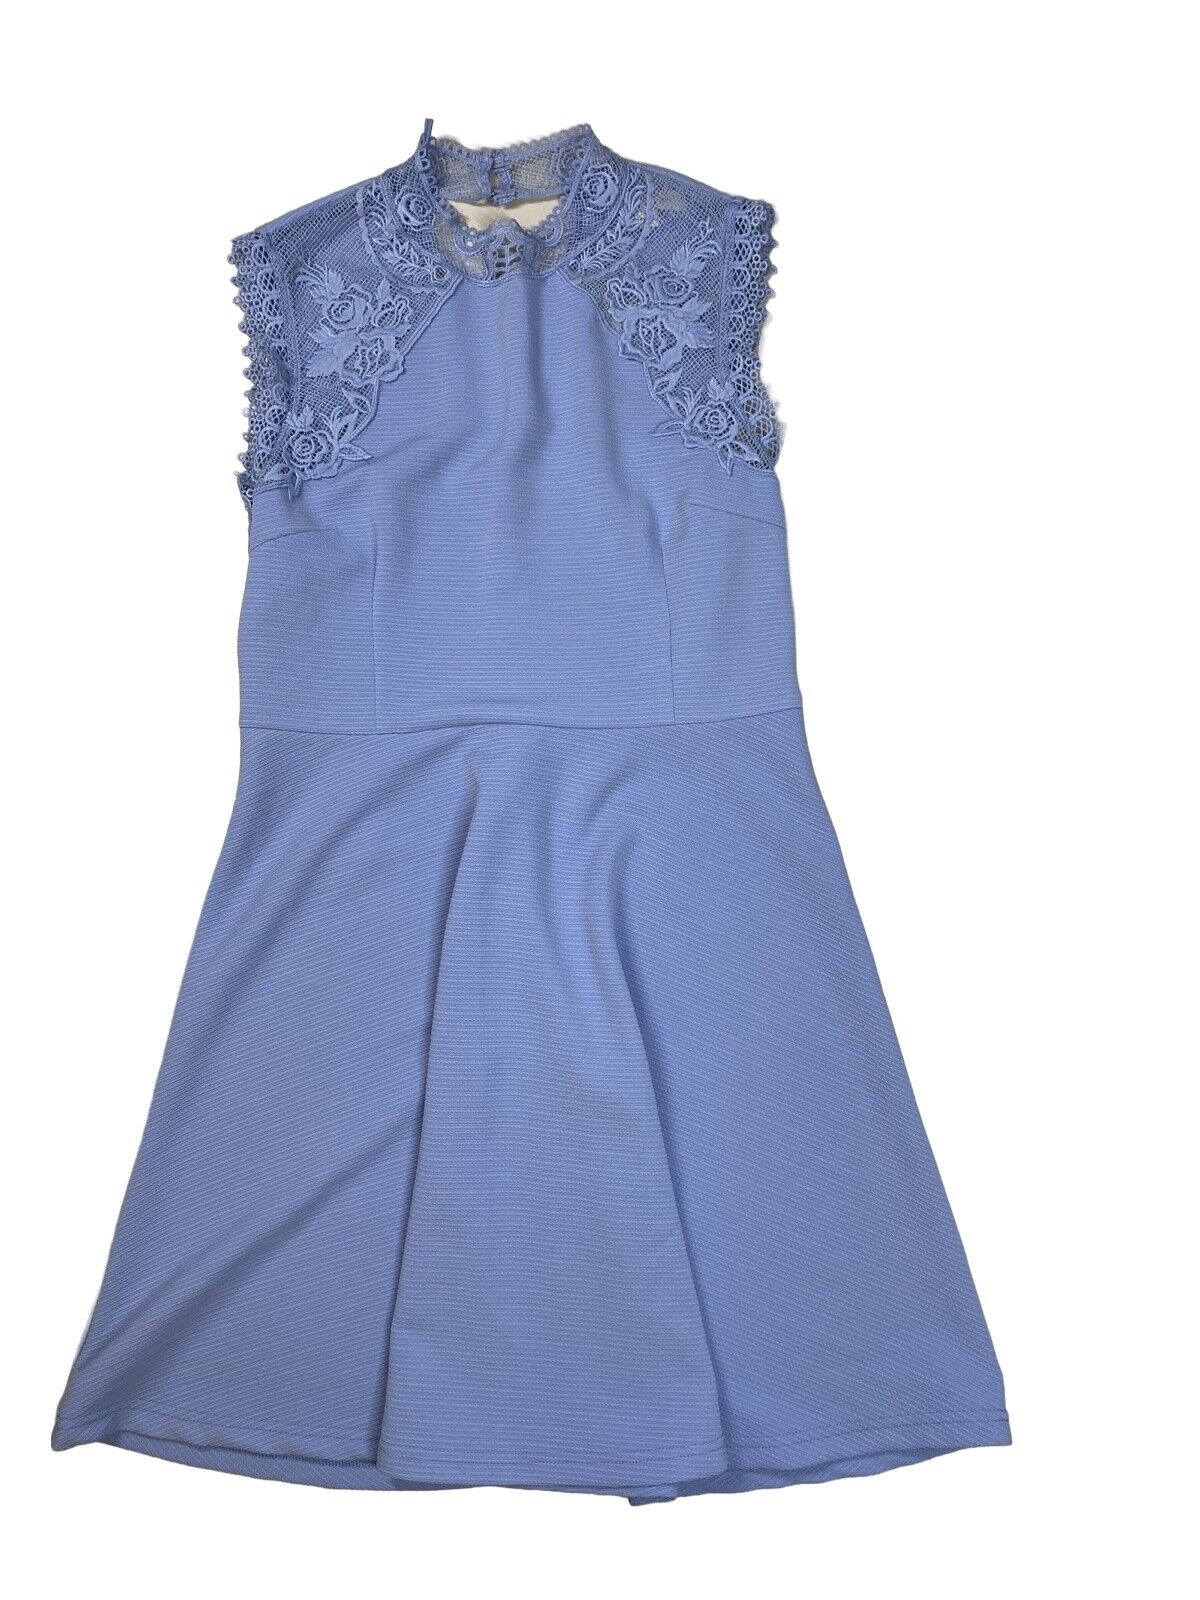 NEW Francesca's Women's Oxford Blue Sleeveless Lace A-Line Dress - L